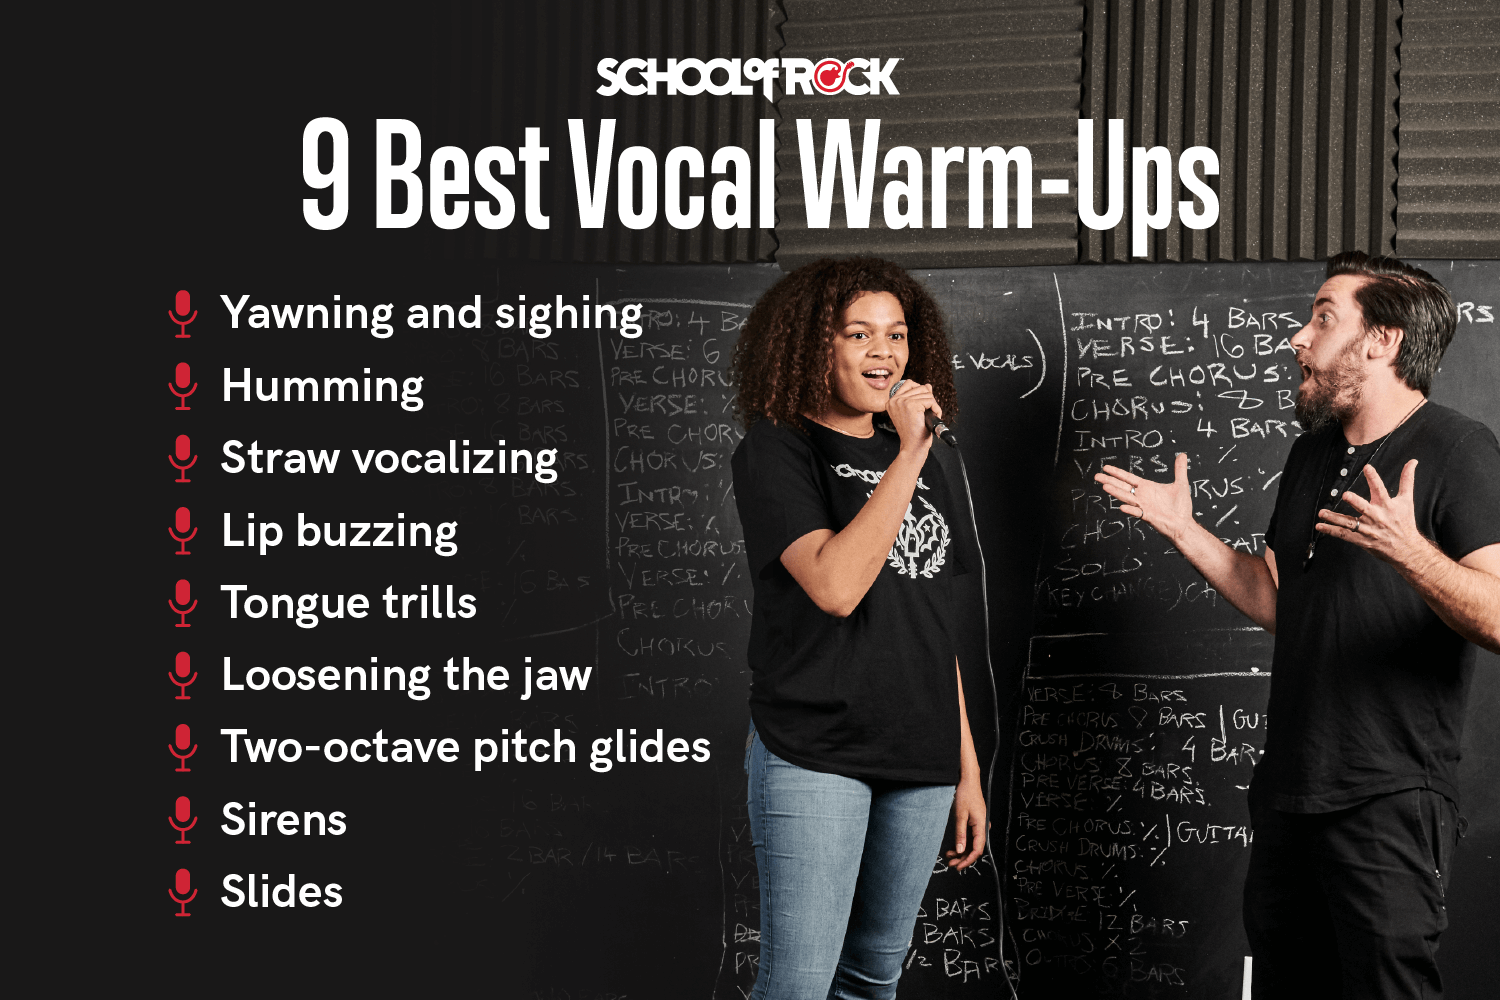 9 best vocal warm ups from School of Rock